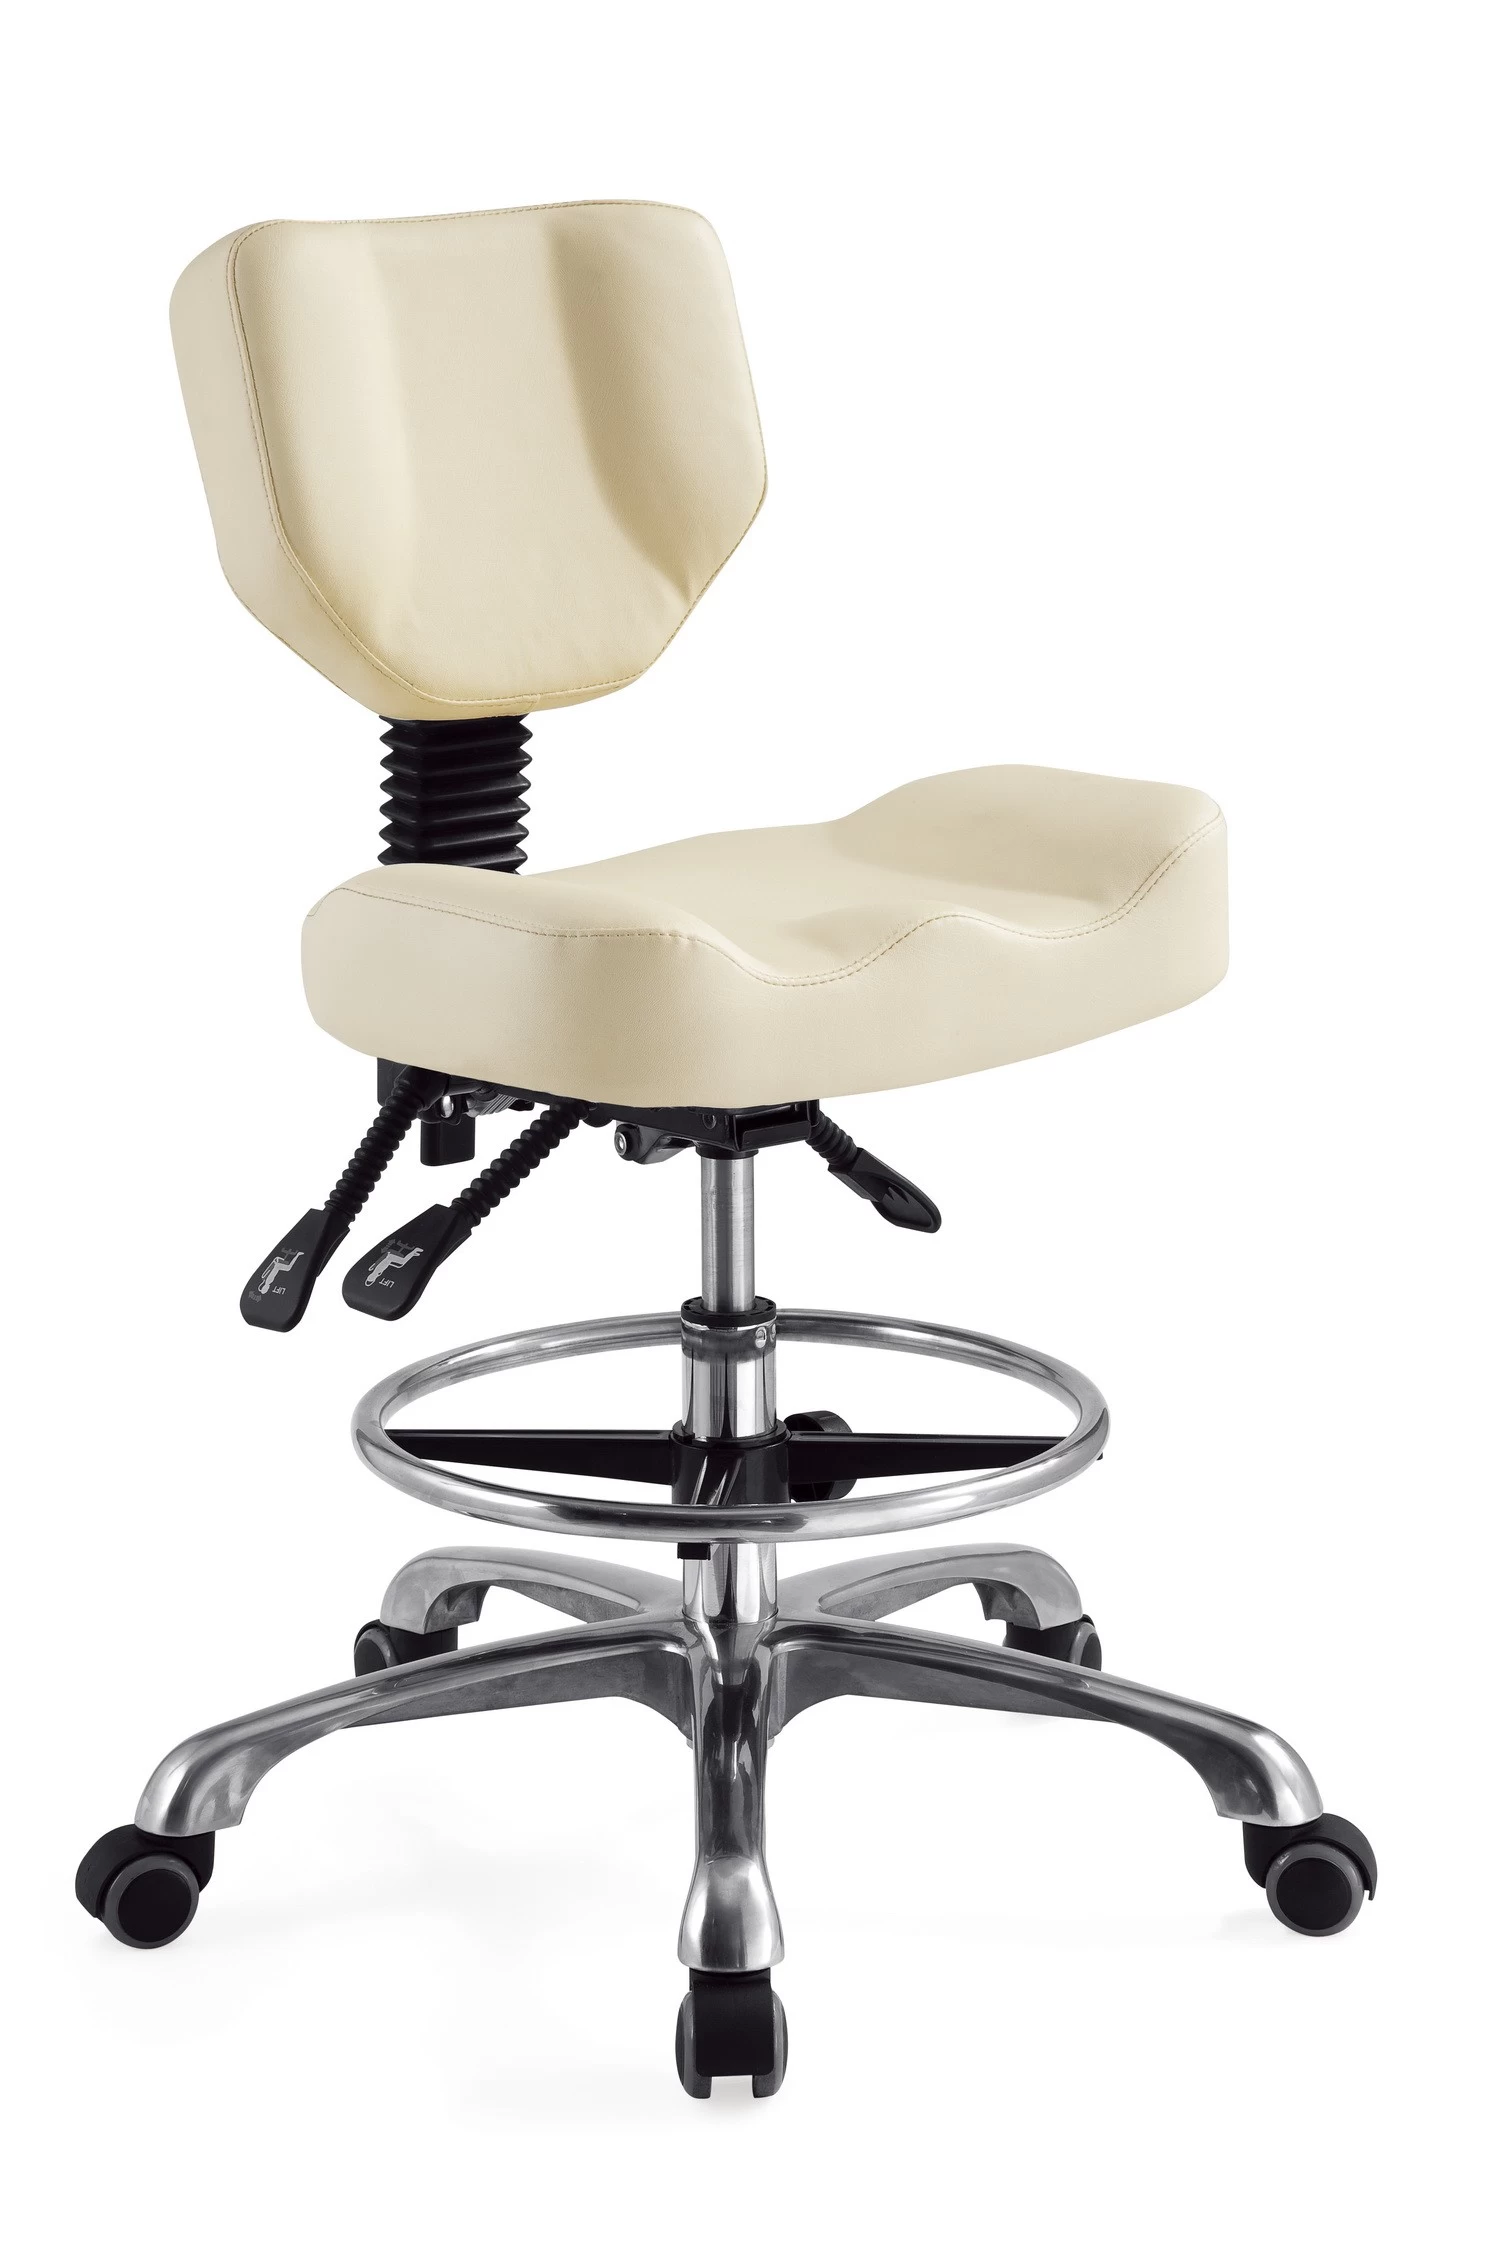  Pedicure technician chair spa salon pedicure chair latest nail technician chairs